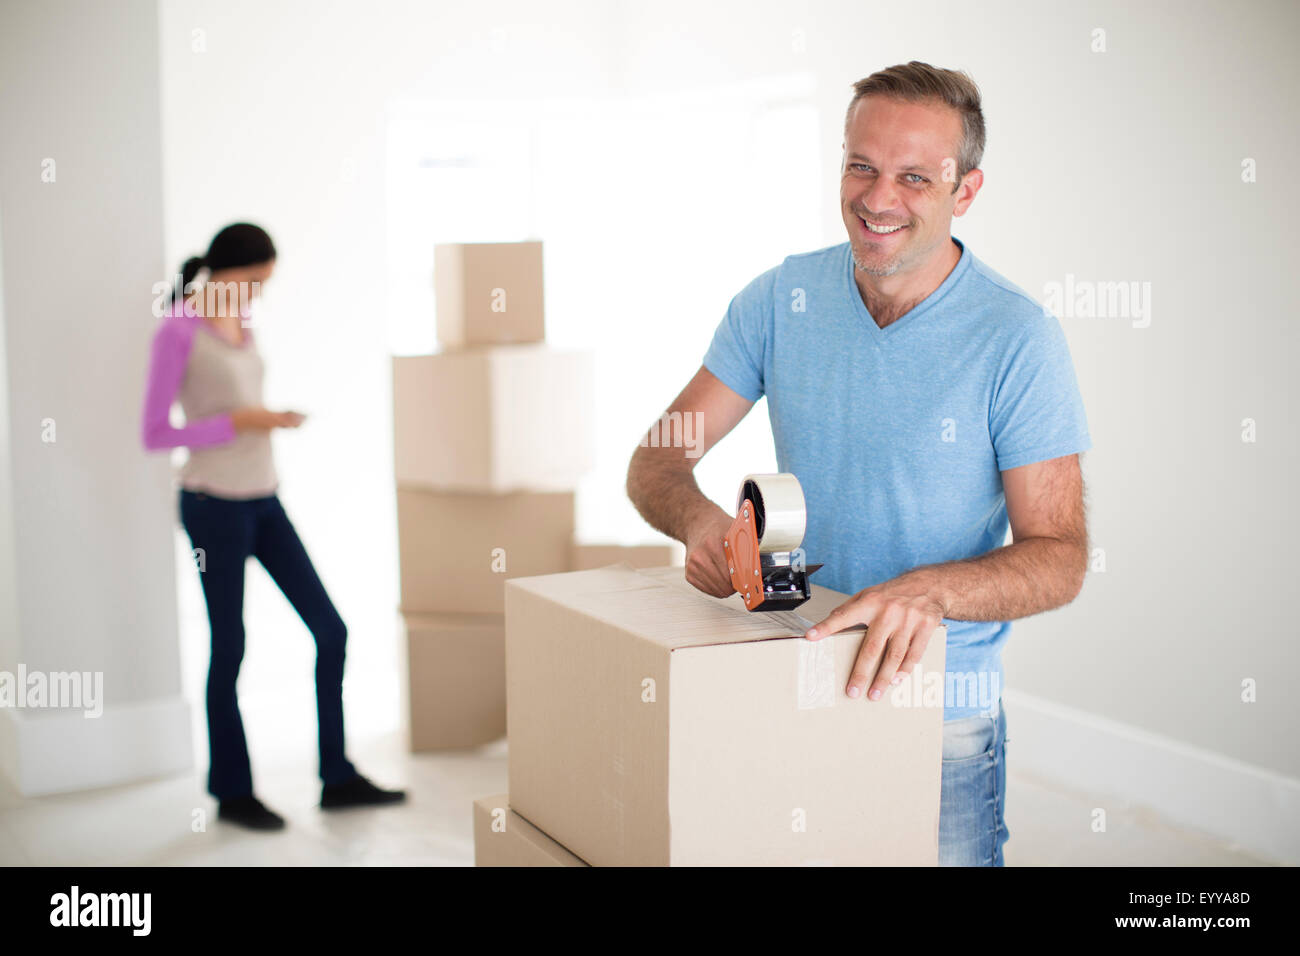 Mann taping Karton zu bewegen Stockfoto